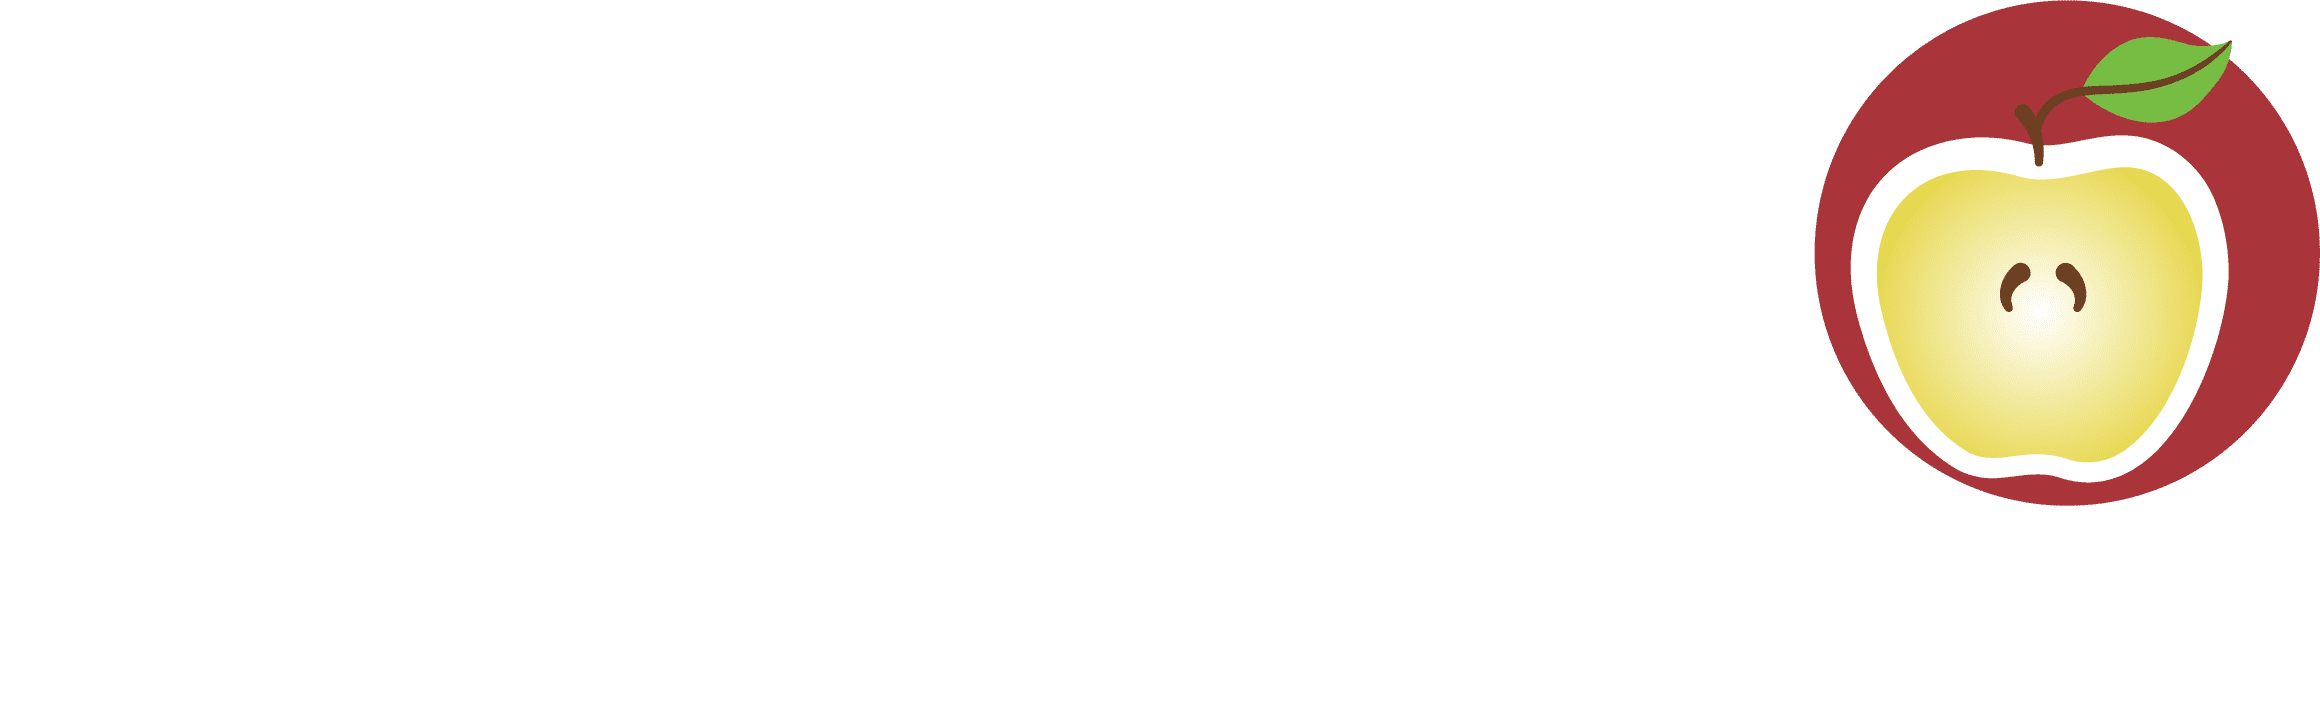 PSFT logo